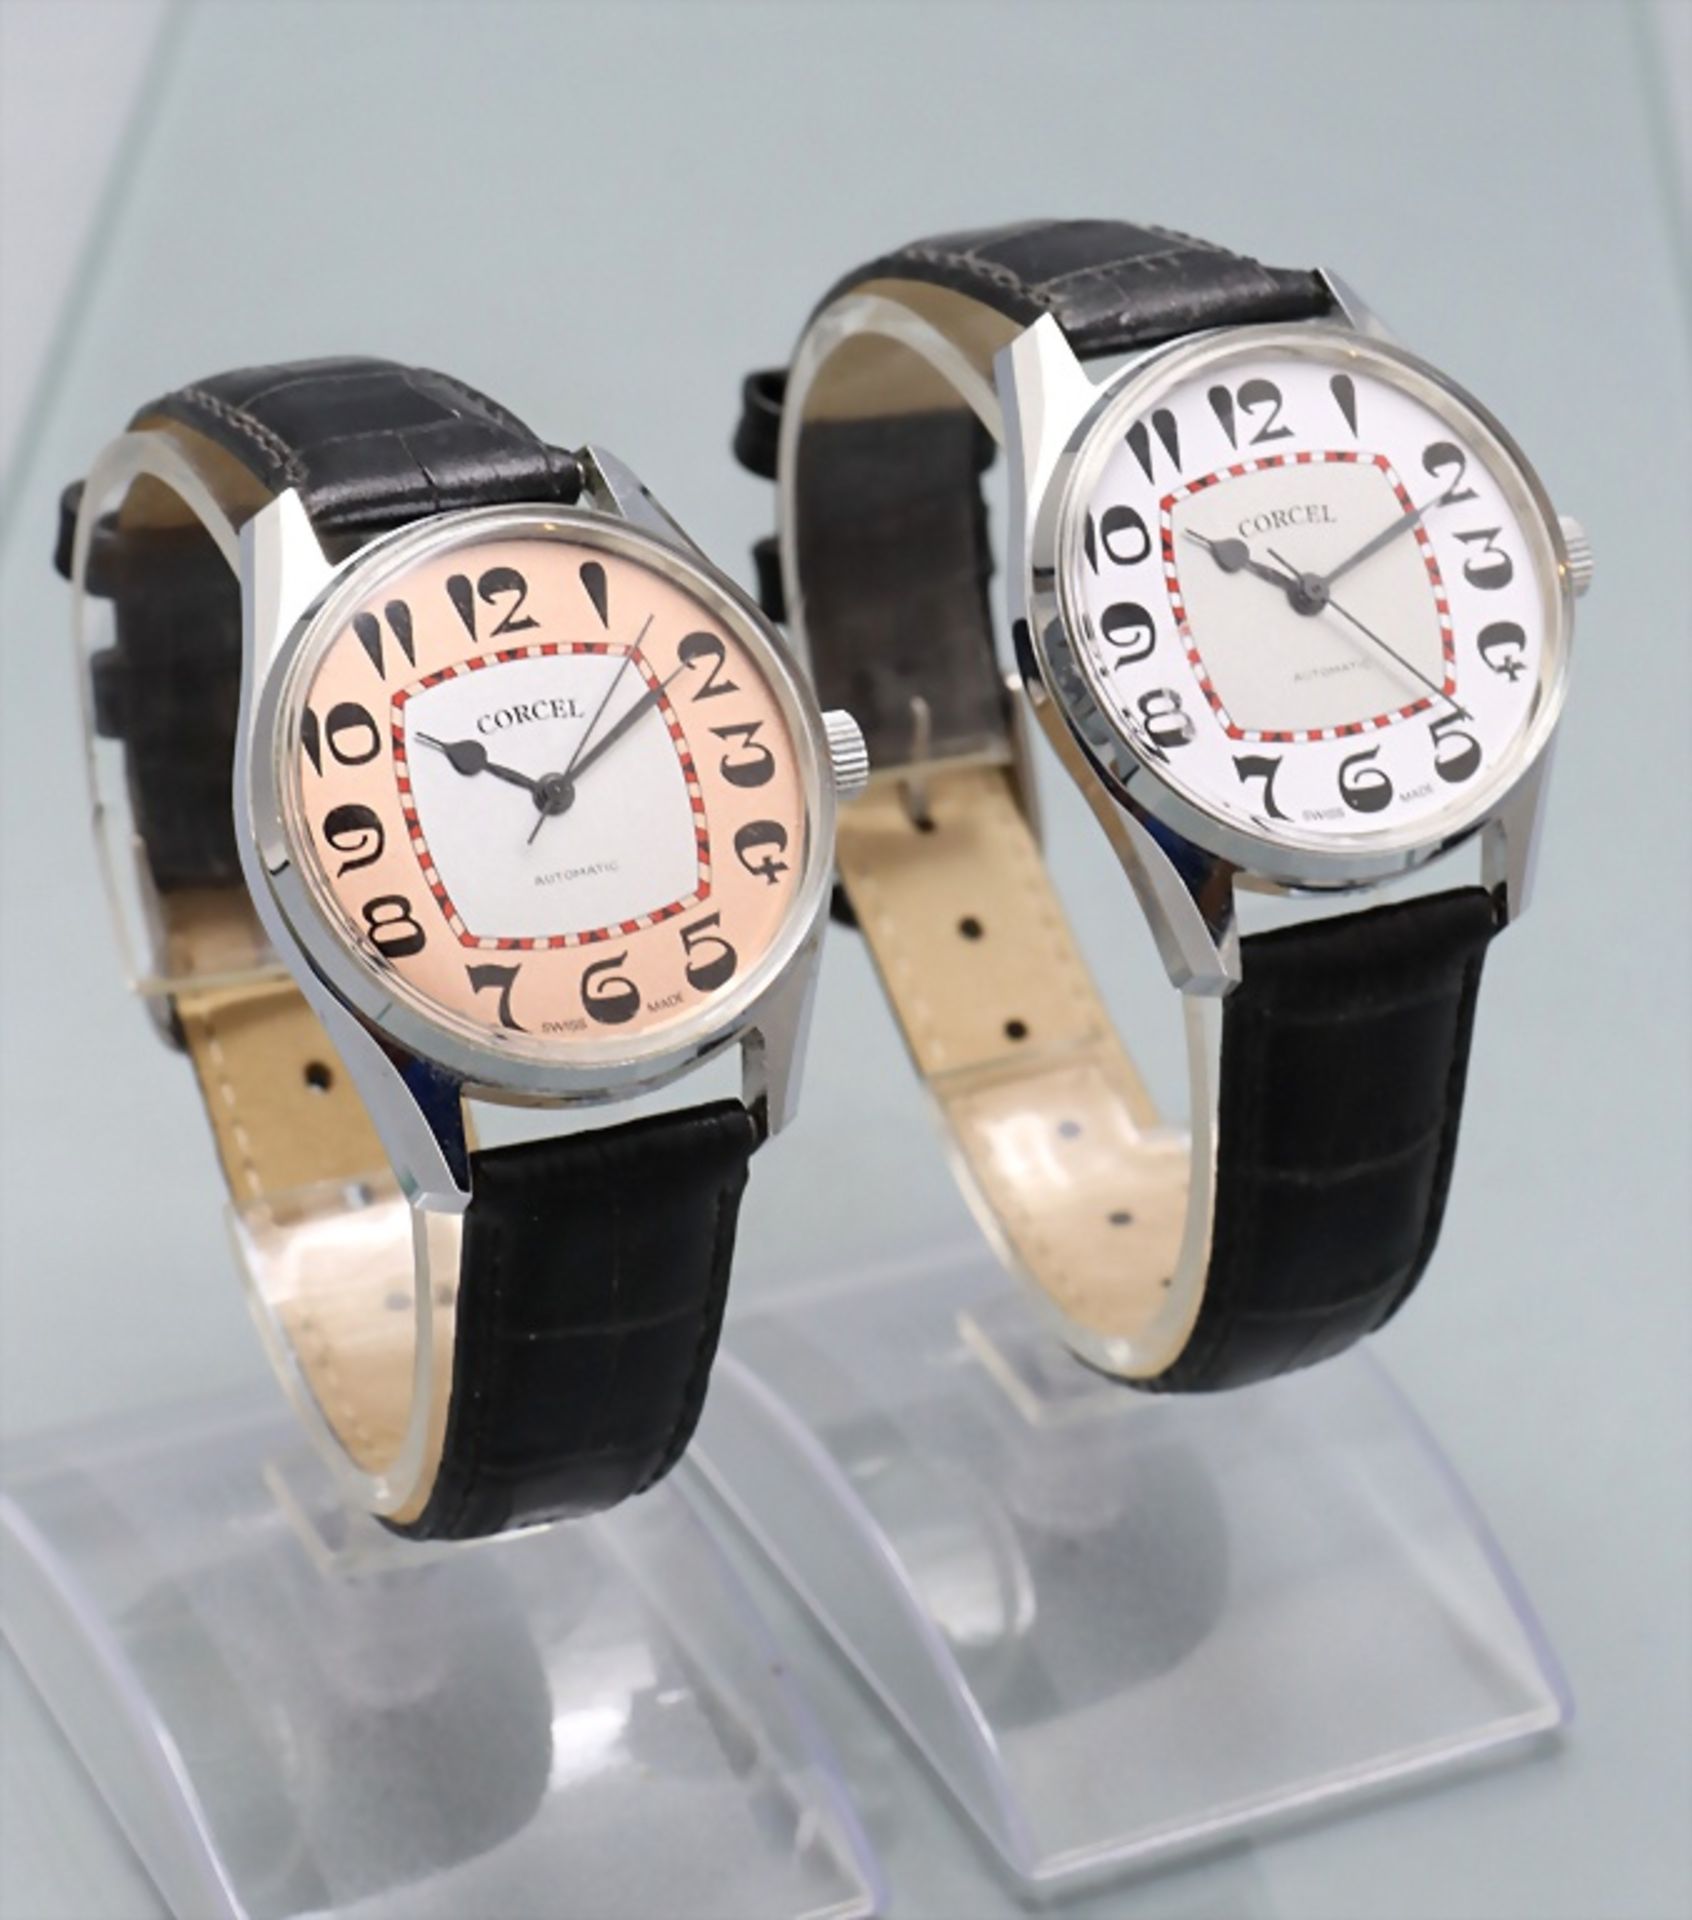 Zwei Herrenarmbanduhren / Two men's wristwatches, Corcel - Image 2 of 7